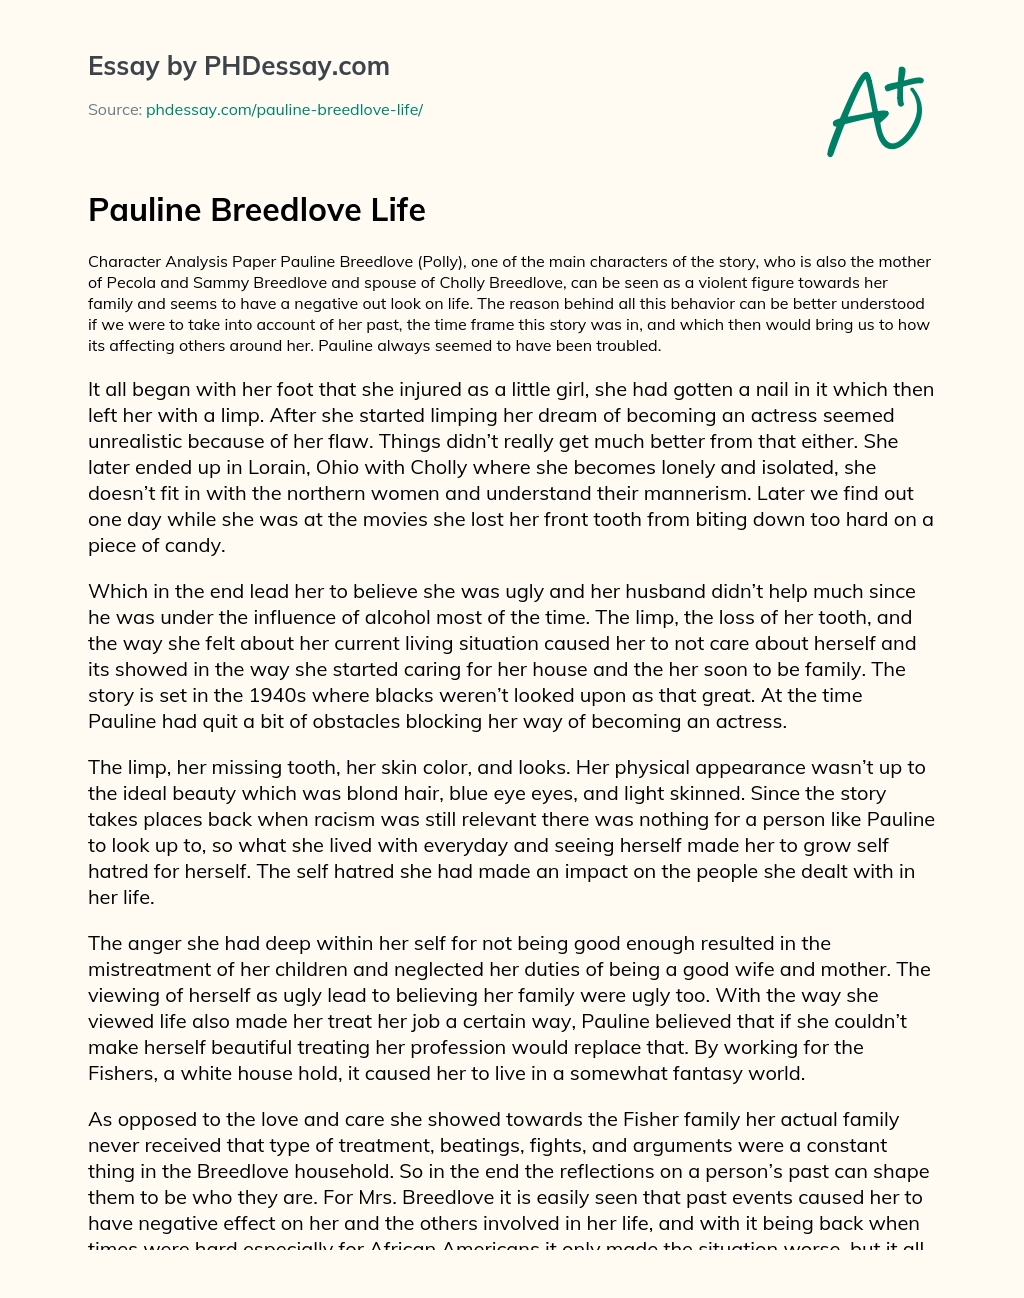 Pauline Breedlove Life essay